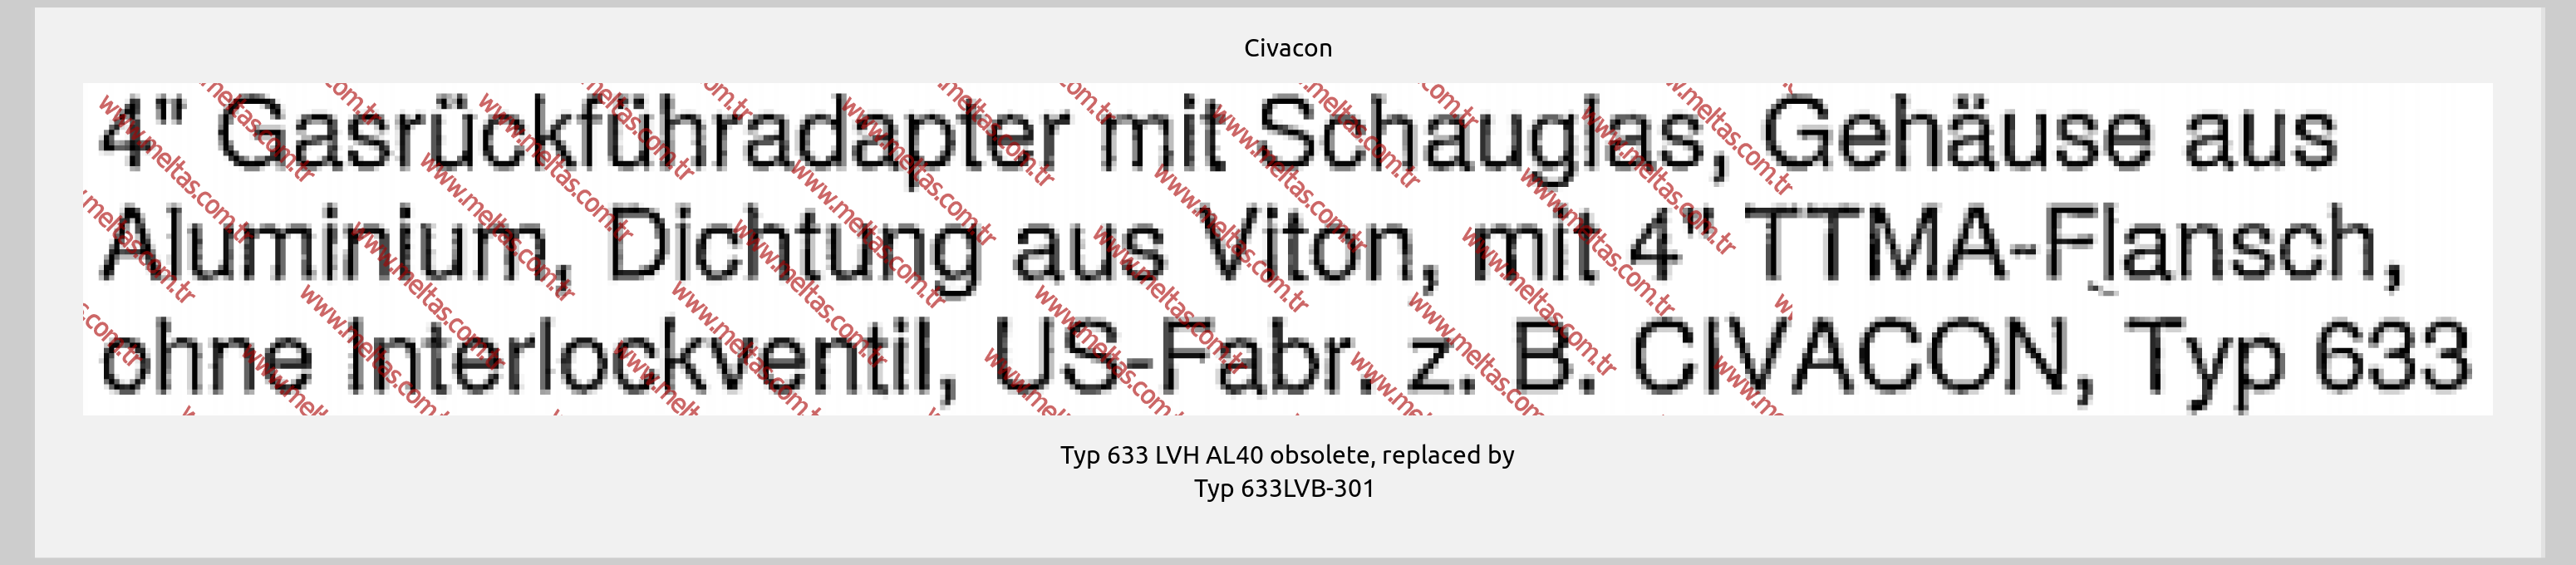 Civacon-Typ 633 LVH AL40 obsolete, replaced by Typ 633LVB-301 